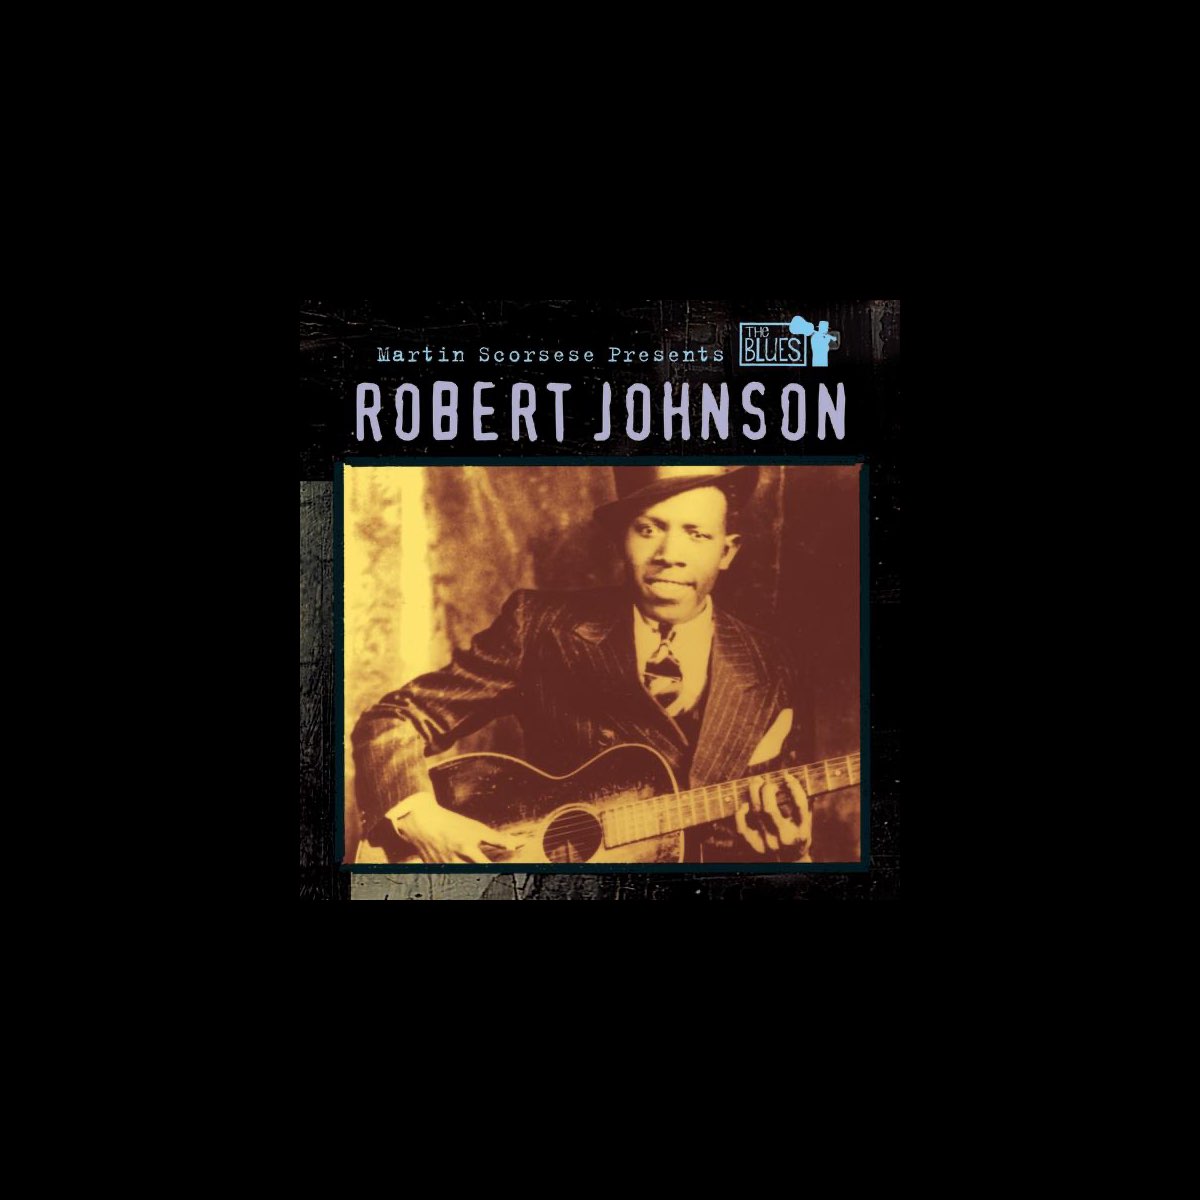 Martin Scorsese Presents The Blues: Robert Johnson by Robert Johnson Apple Music